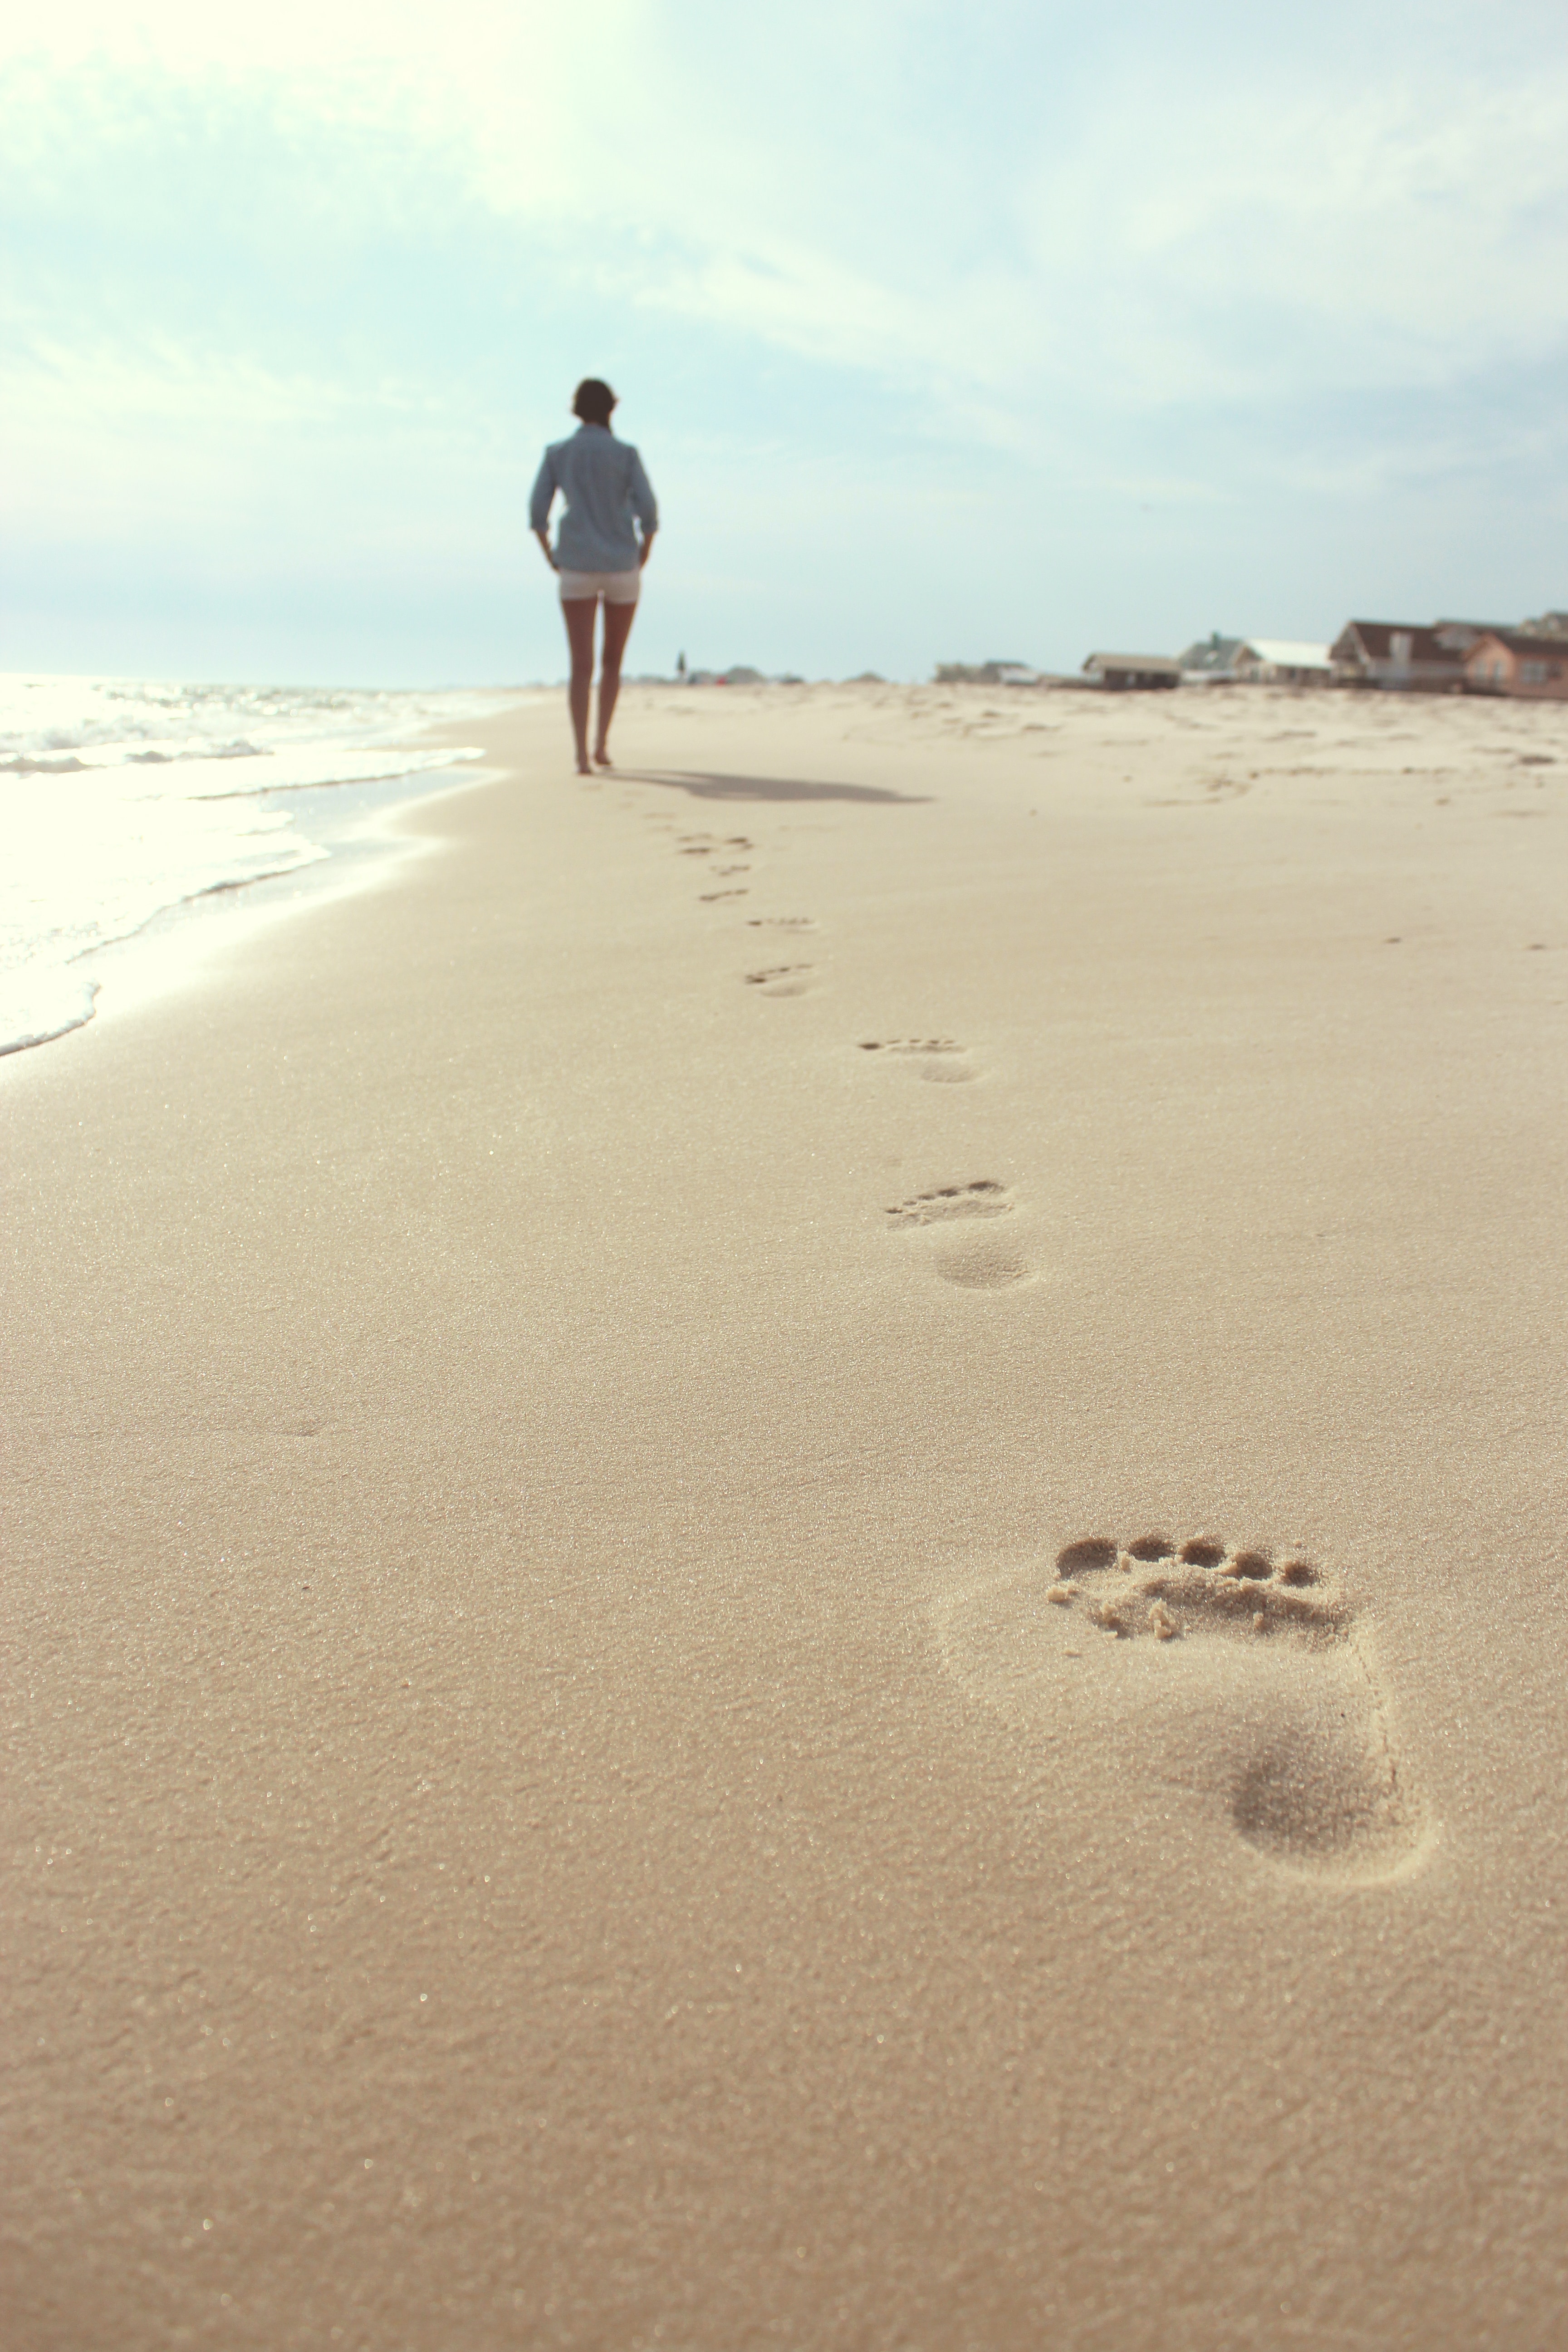 A woman walking on the beach. | Source: Unsplash